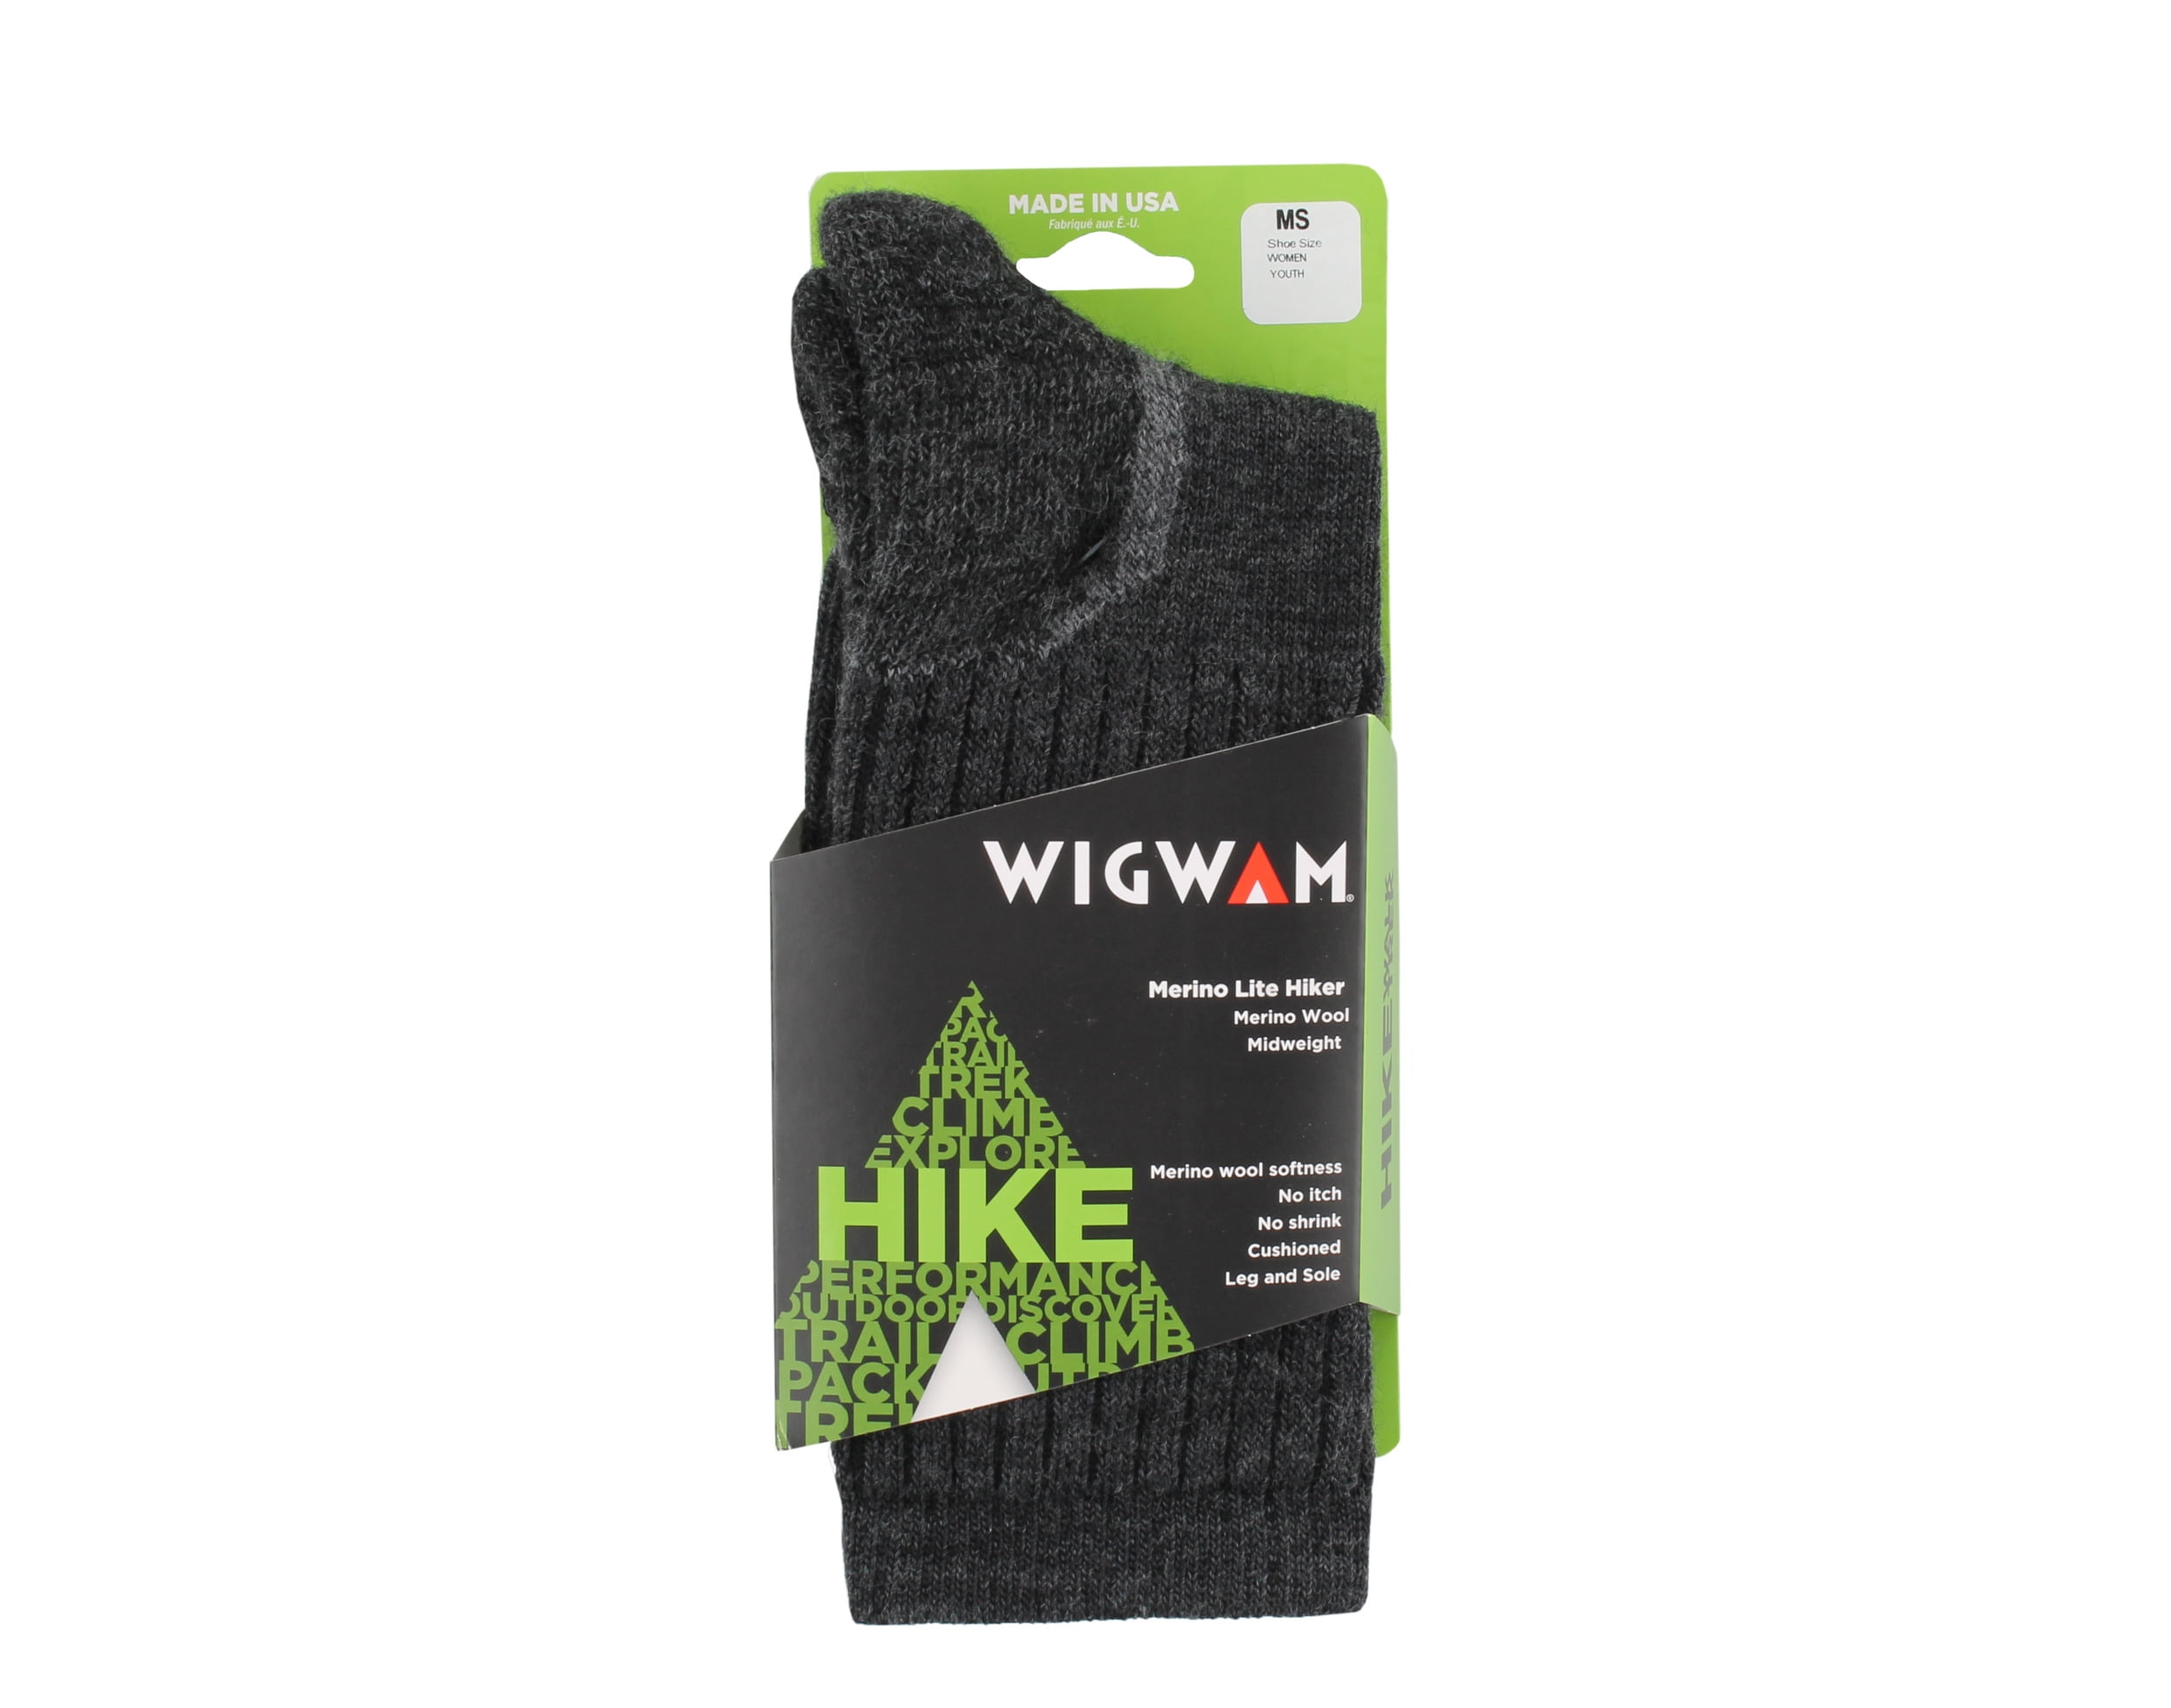 Color Black F2300-052 Wigwam Merino Lite Hiker Midweight Crew Socks 